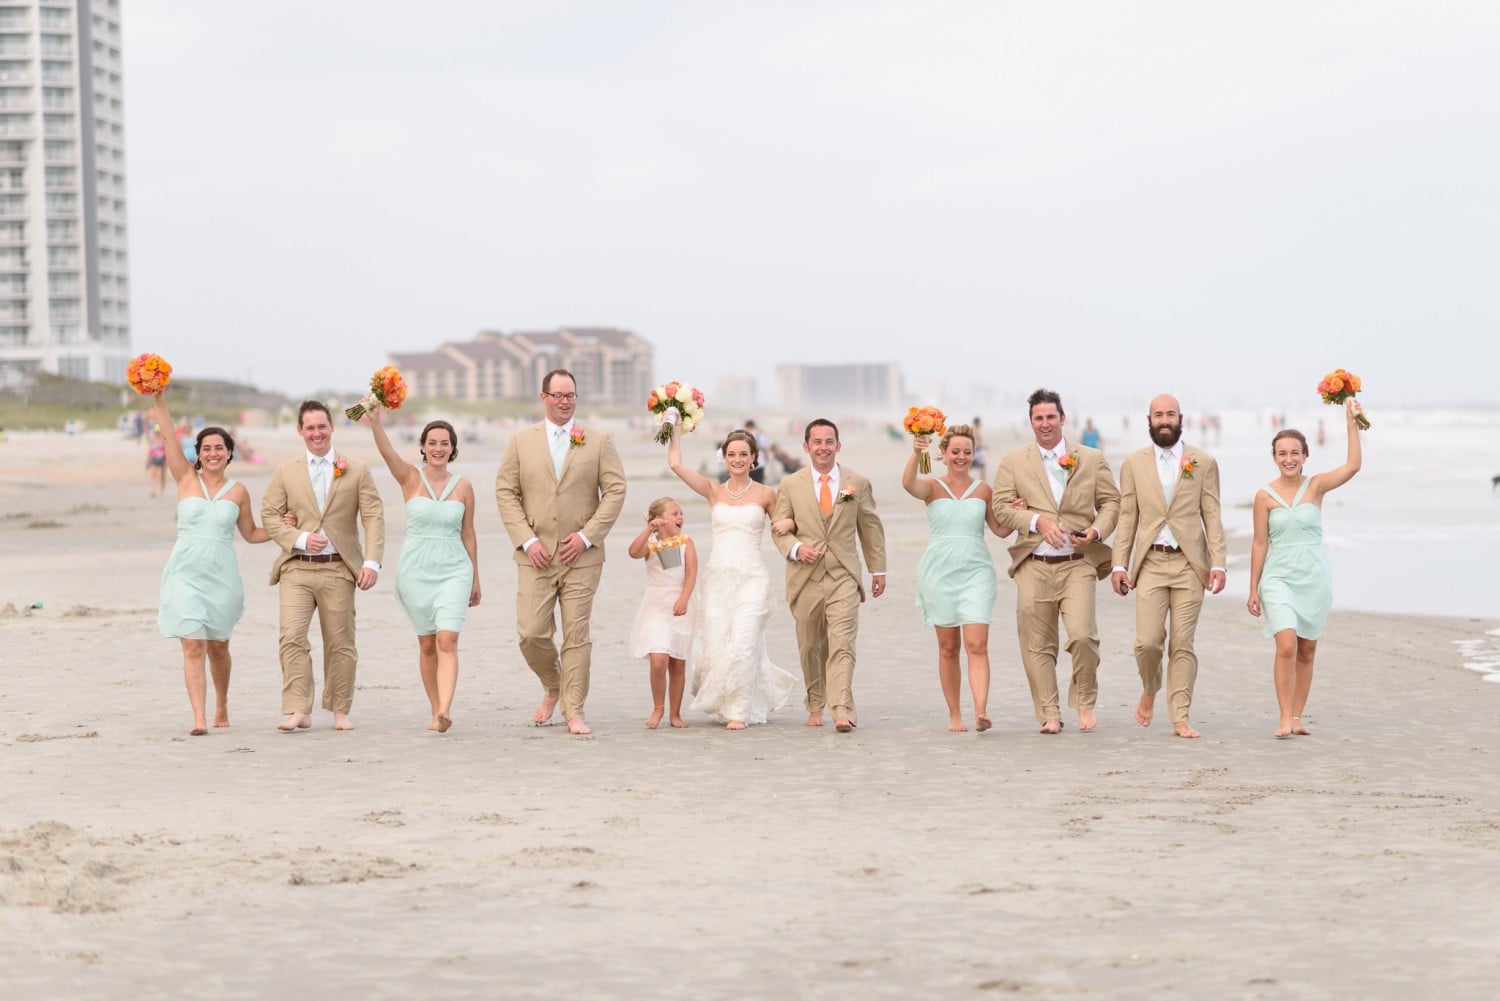 Wedding party walking together down a crowded beach - Hilton at Kingston Plantation